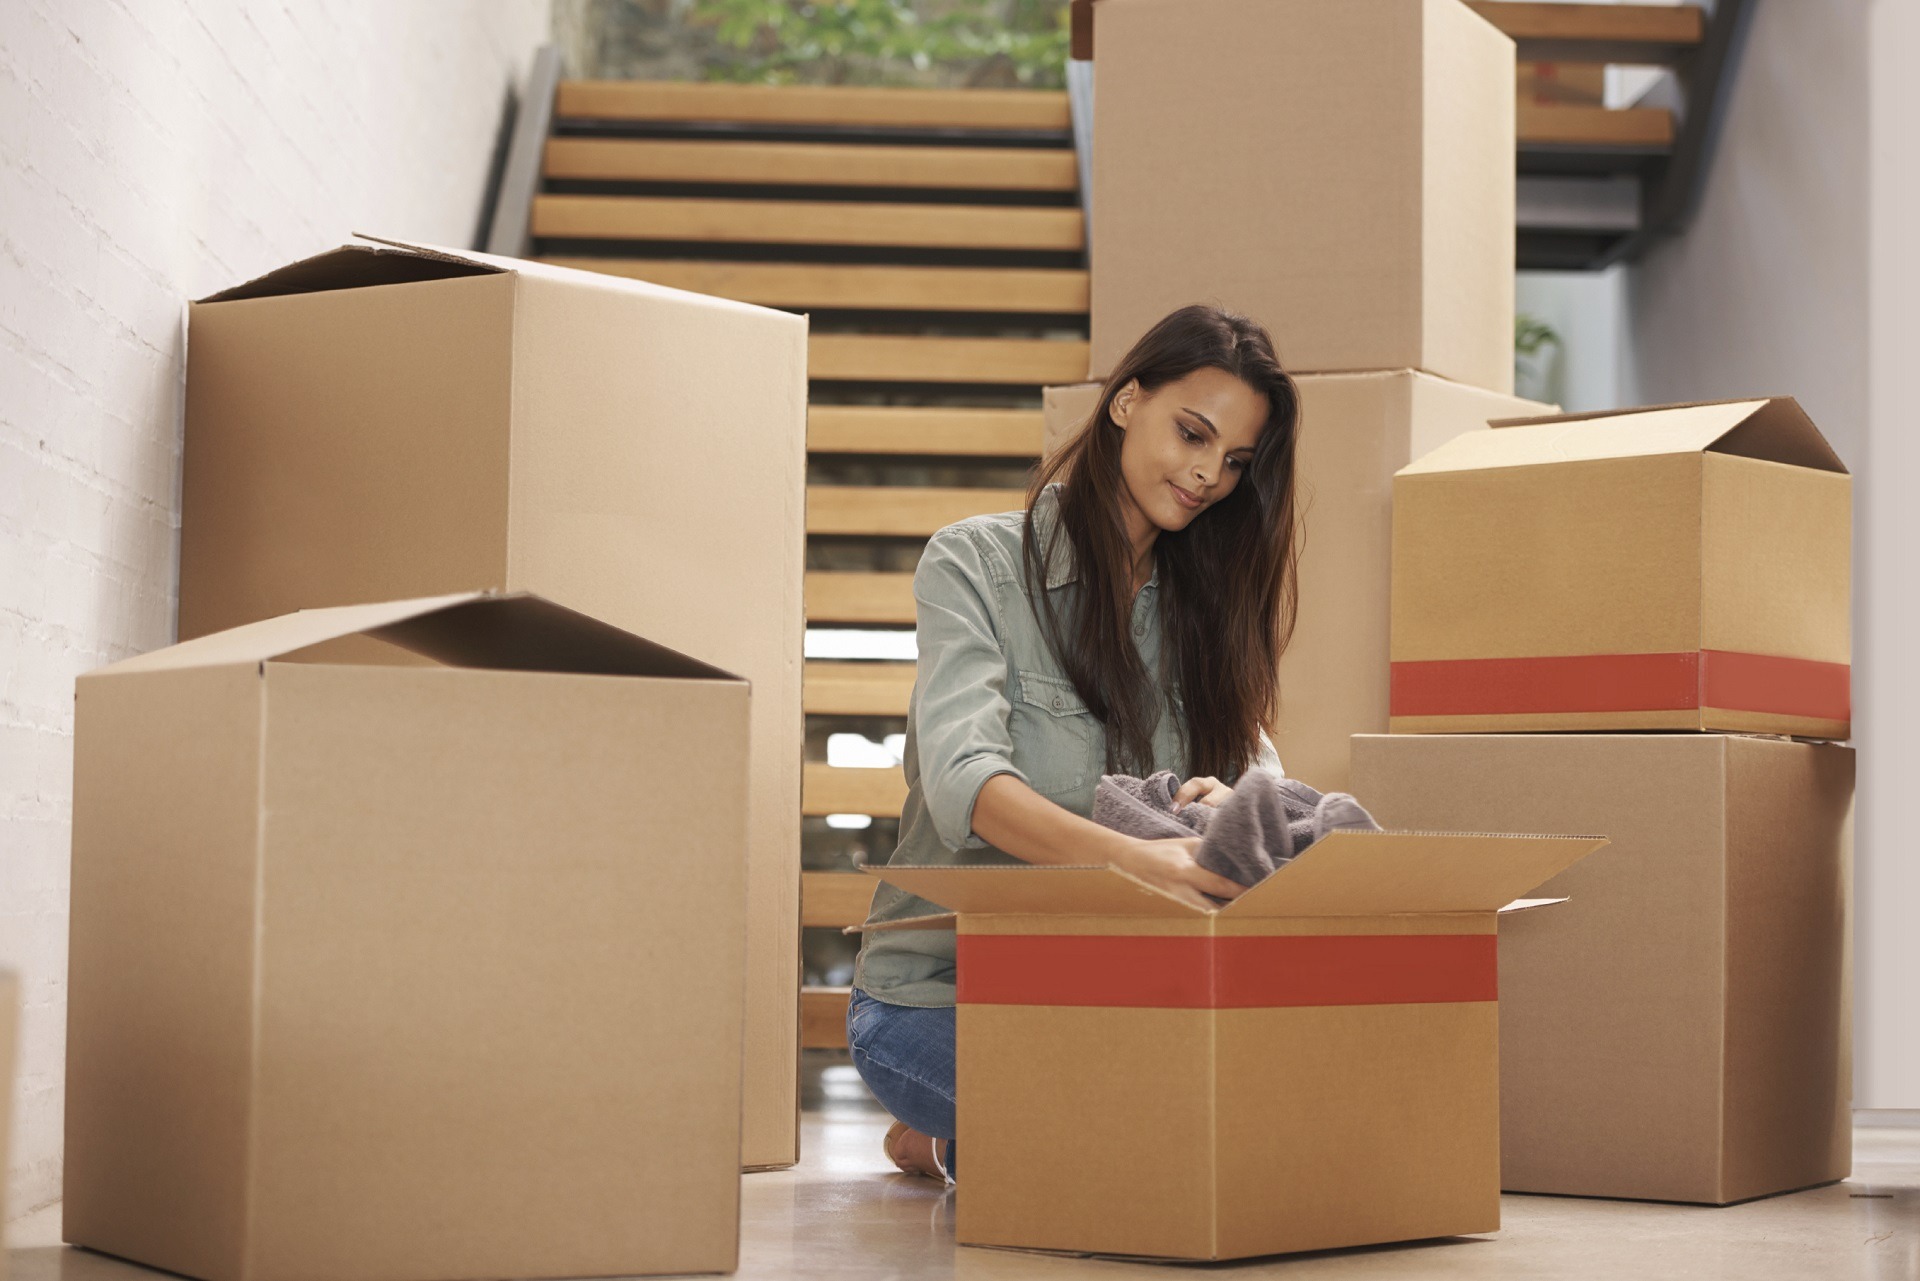 Переезжать постепенно. Женщина с коробками. Коробки для переезда. Коробки в квартире. Коробки с товаром.